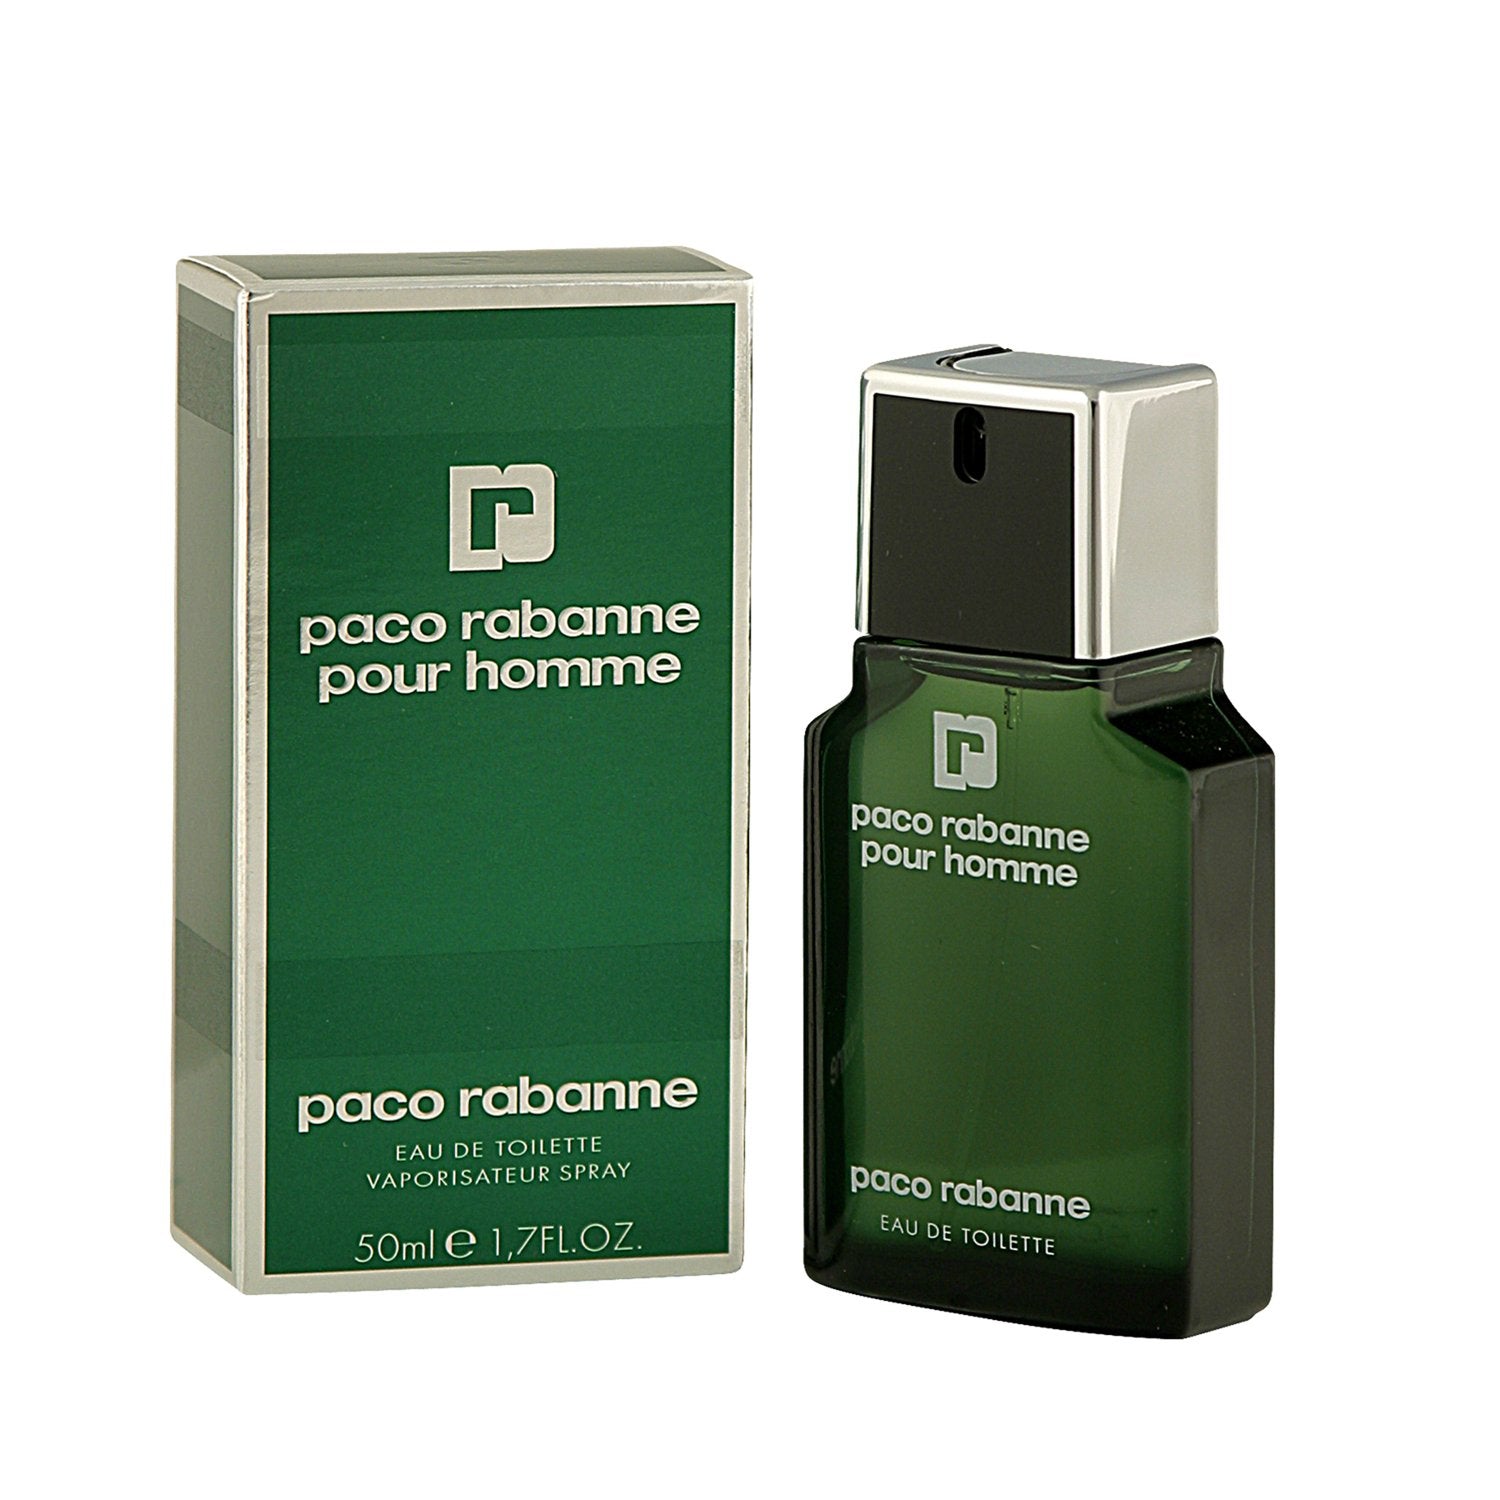 Paco rabanne homme. Paco Rabanne pour homme 50ml EDT. Paco Rabanne men EDT зеленый. Paco Rabanne pour homme 50ml EDT Spray. Духи Paco Rabanne зеленые.